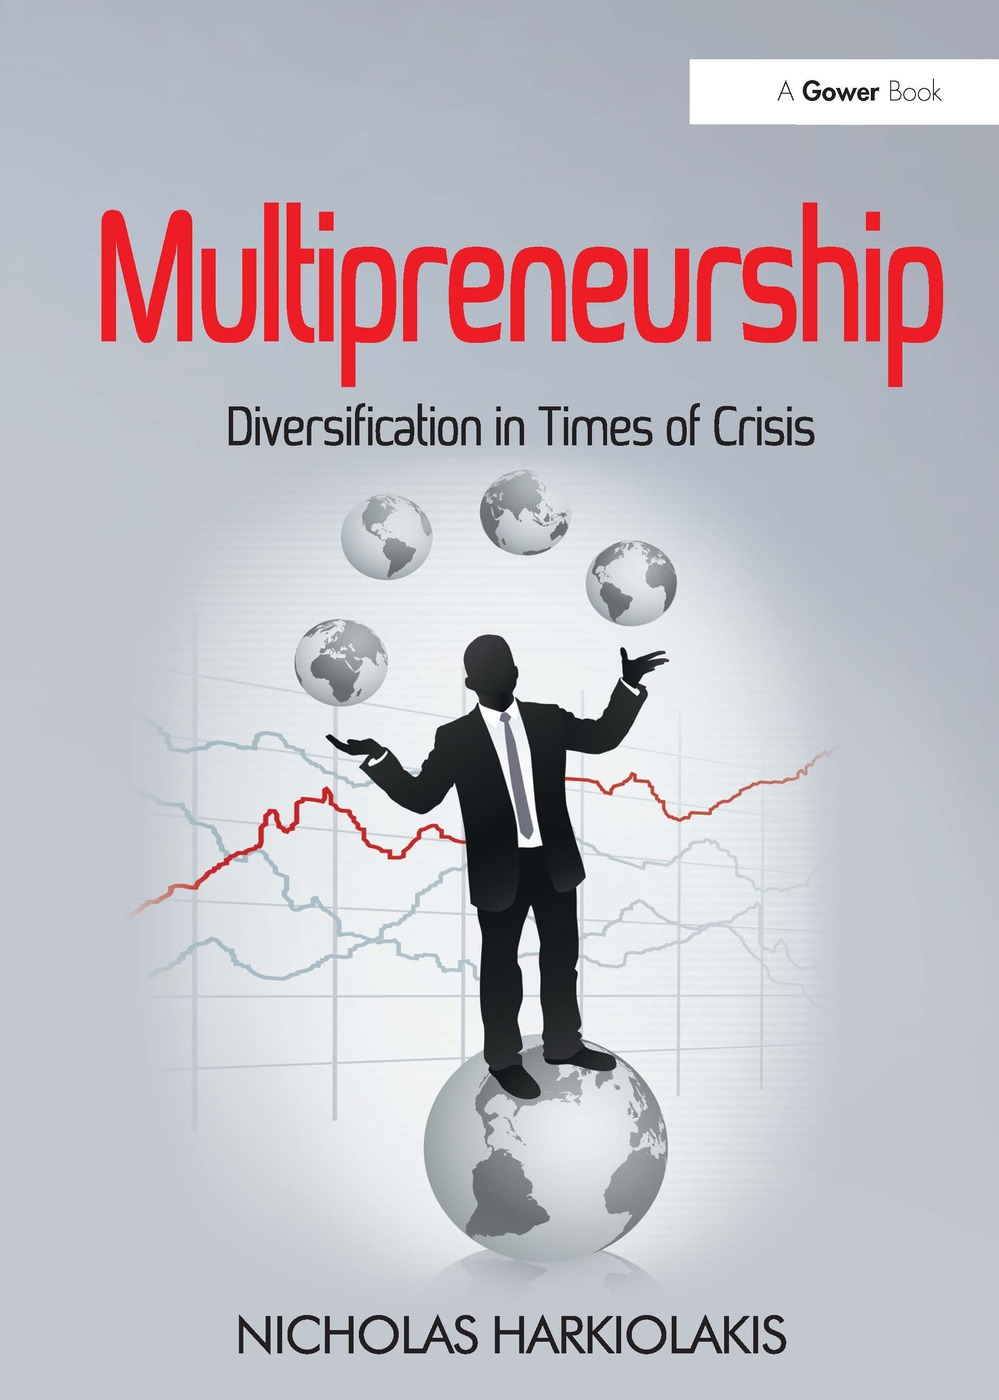 Multipreneurship: Diversification in Times of Crisis